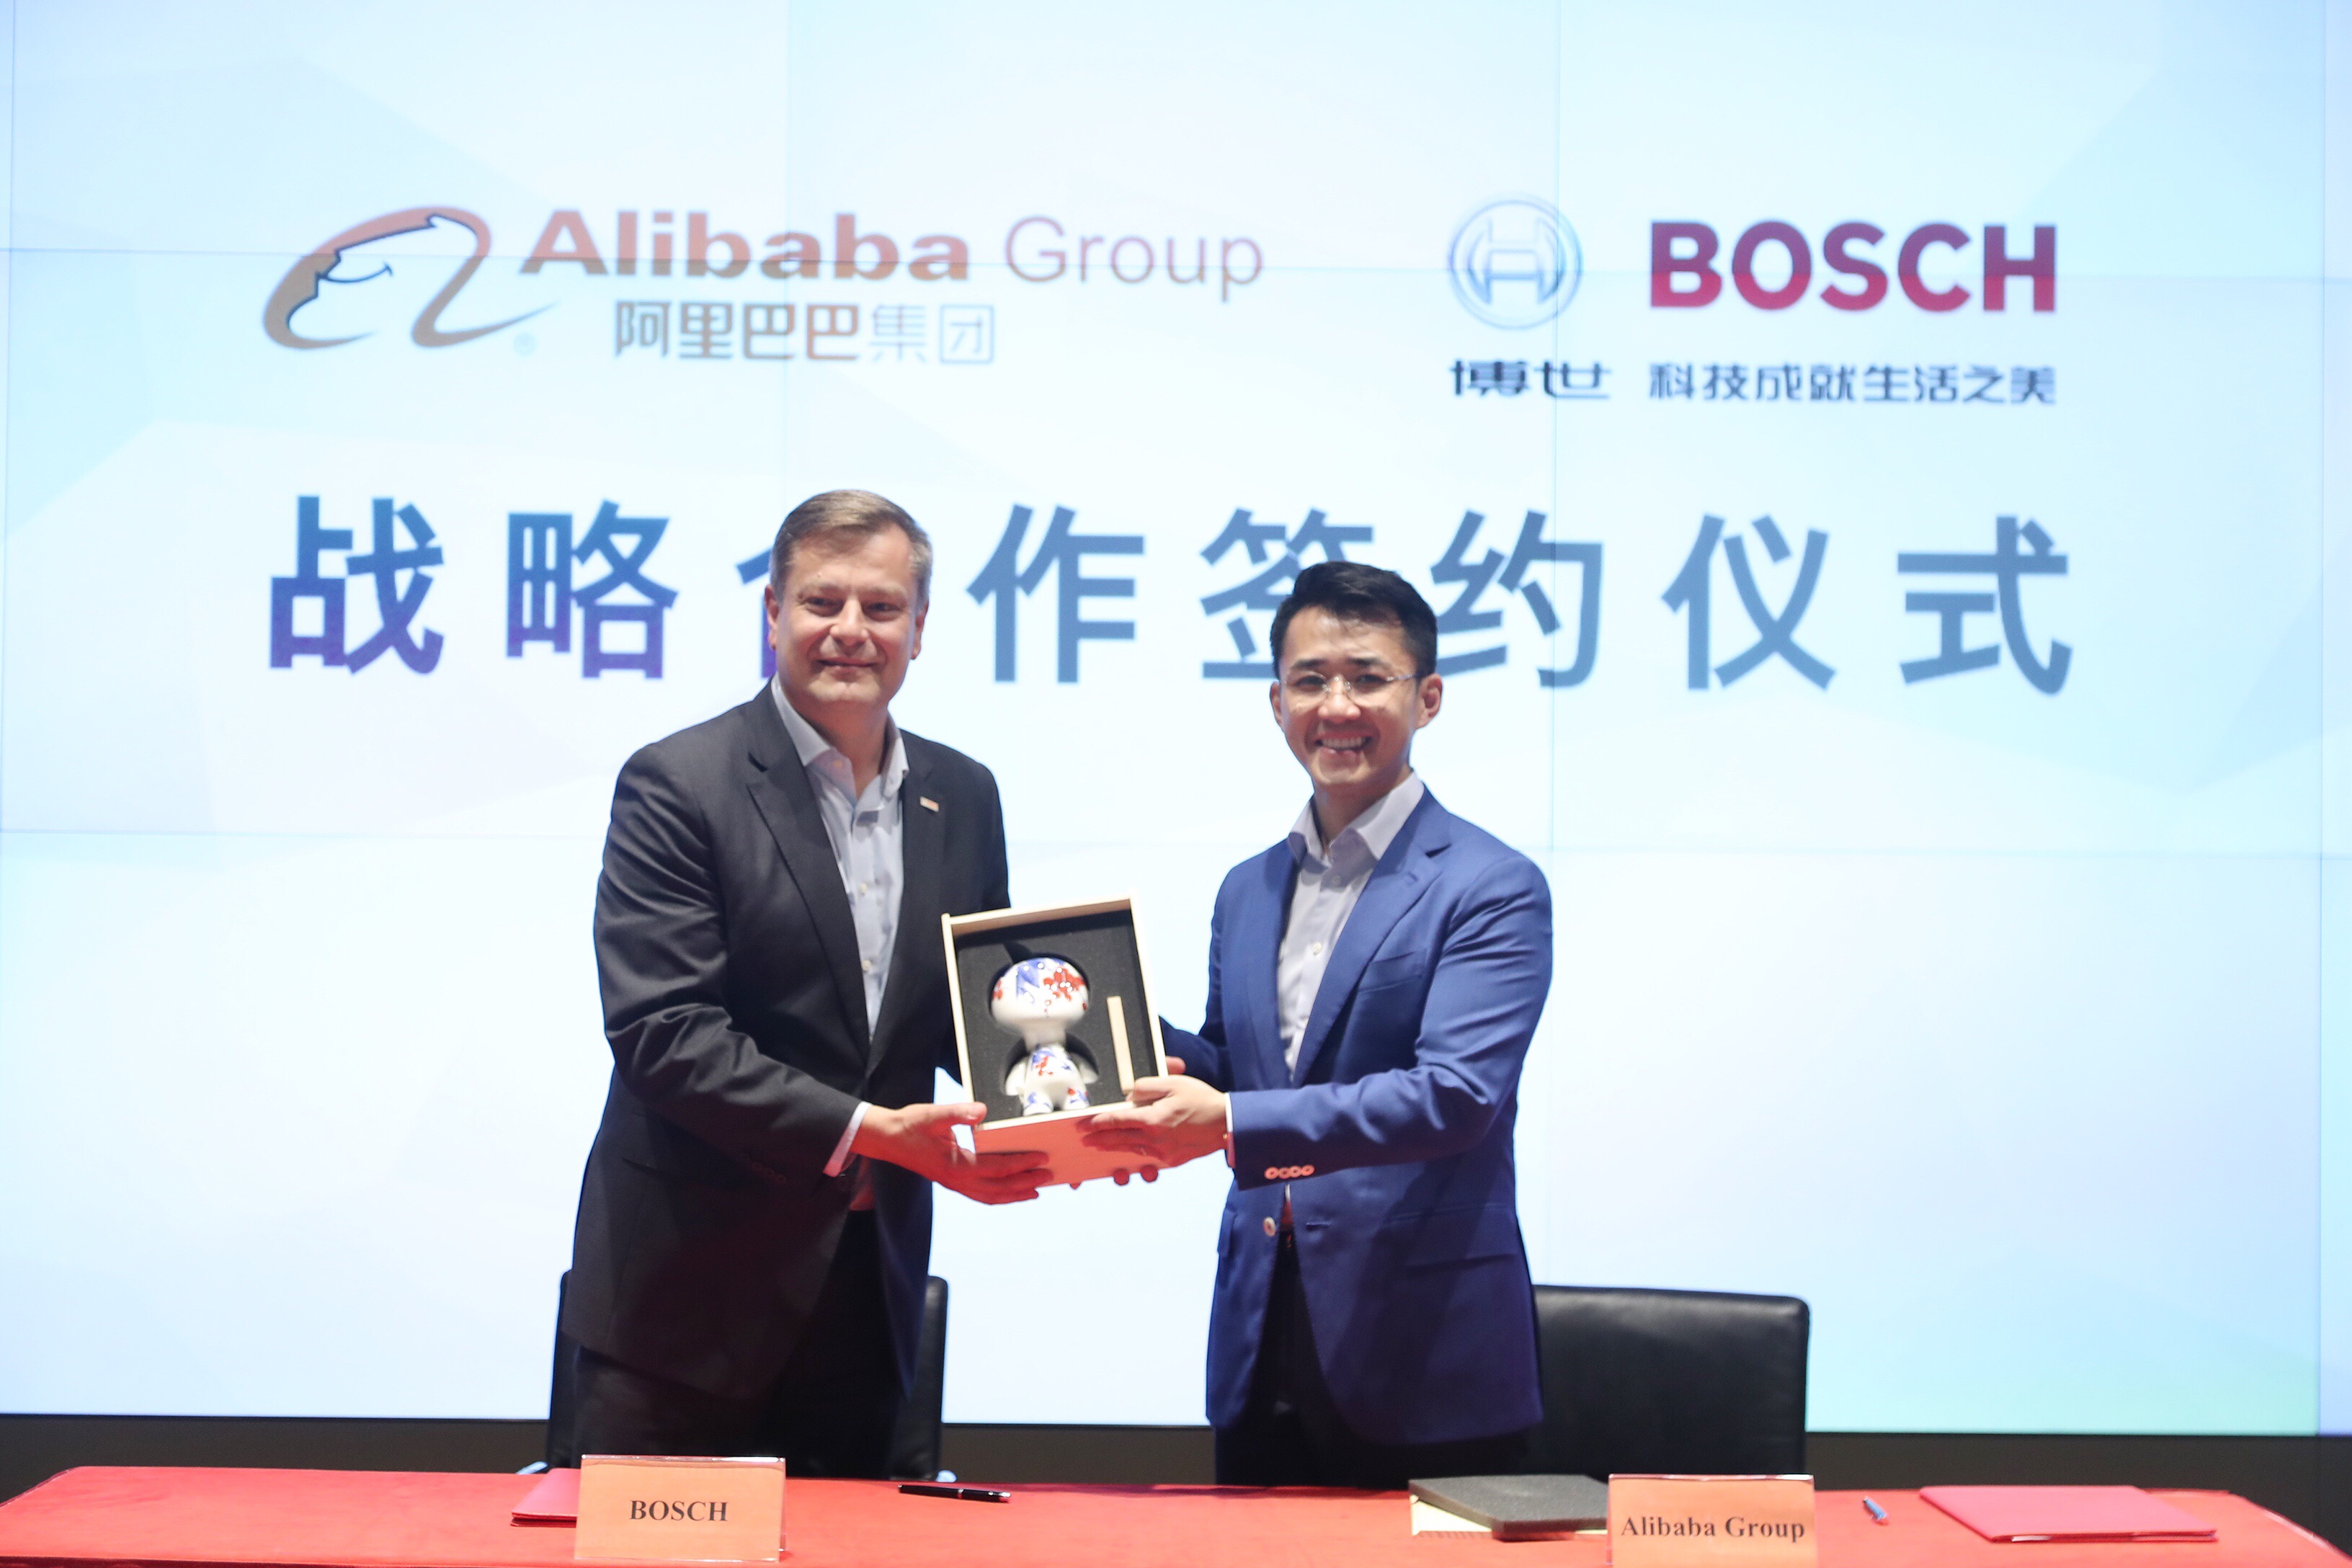 Strategic Alliance with Alibaba